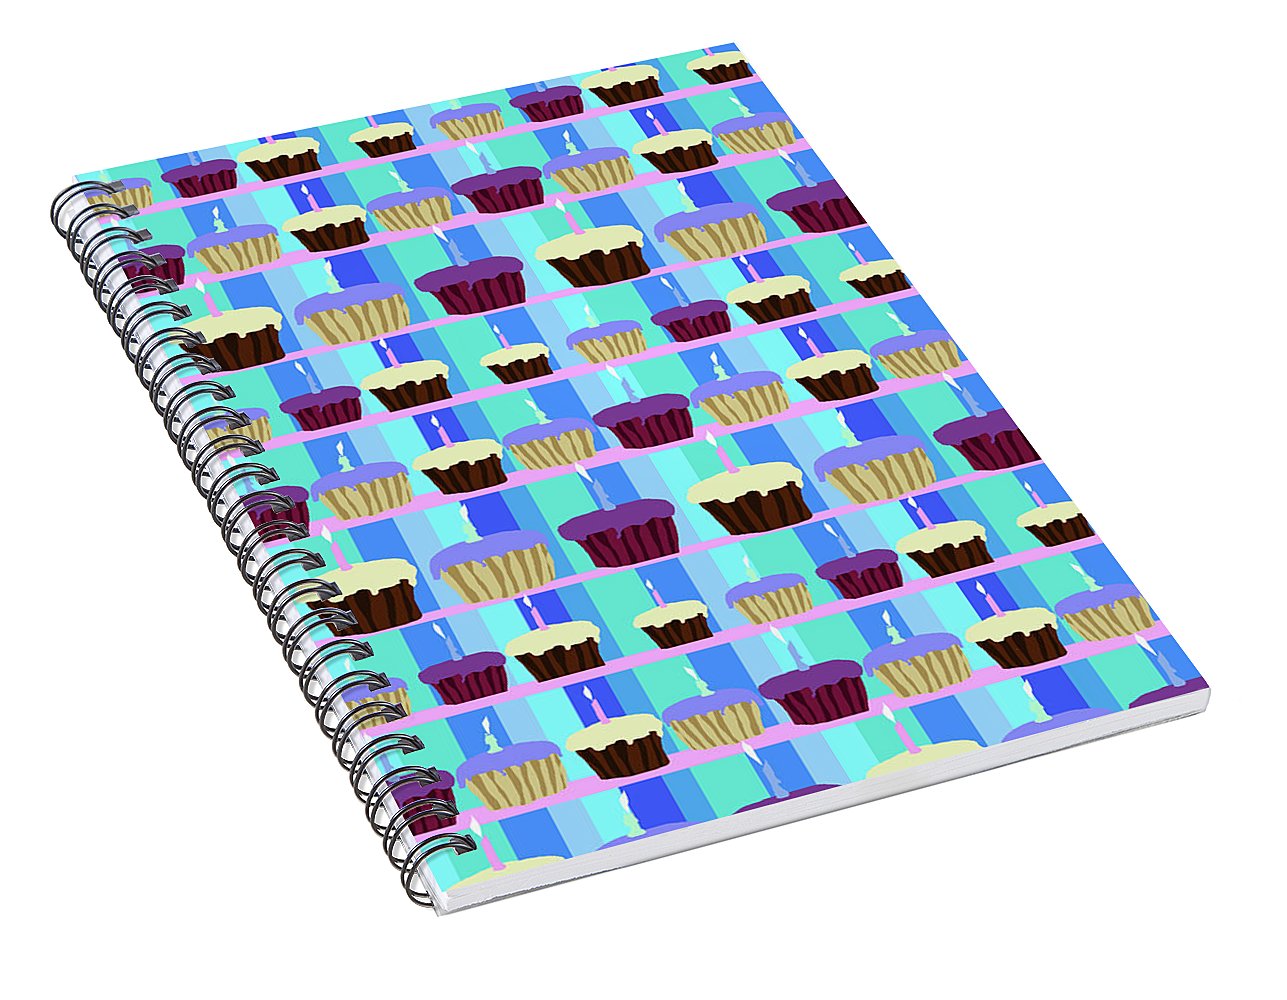 Cupcakes Pattern - Spiral Notebook